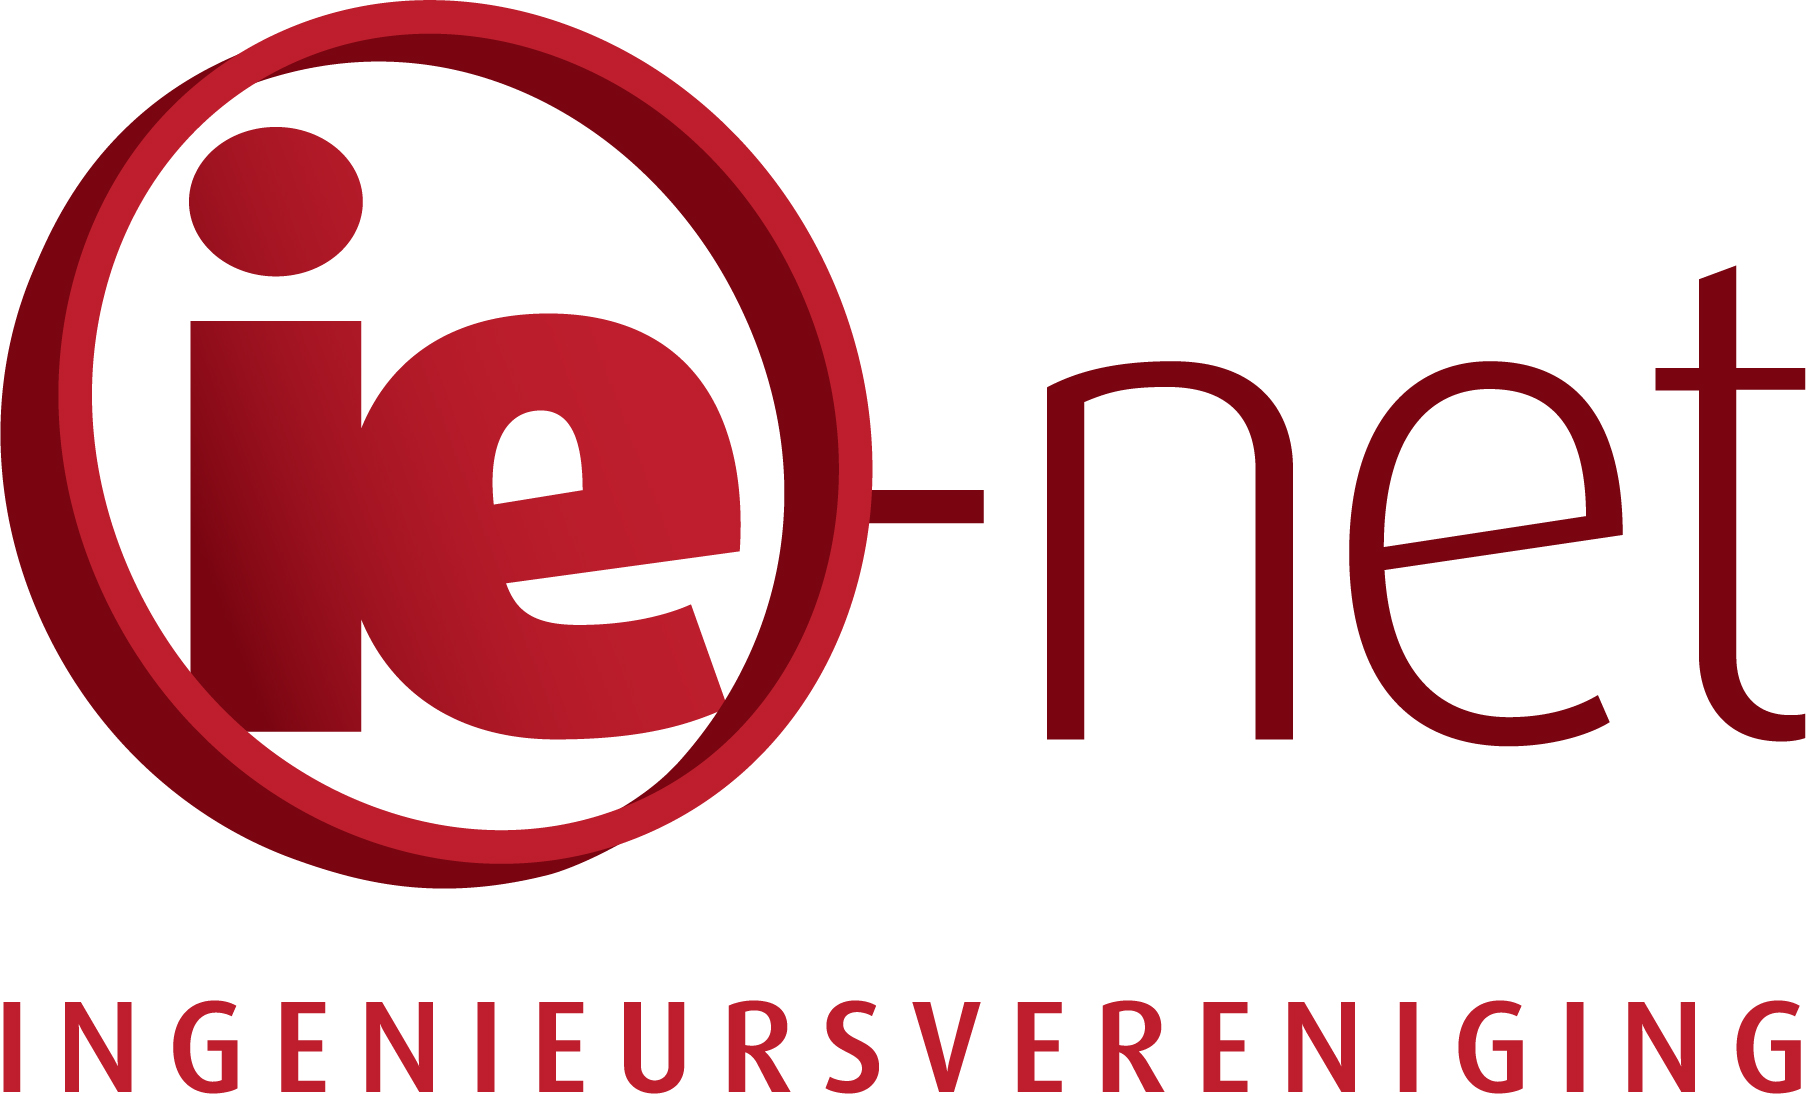 ie-net ingenieursvereniging vzw logo